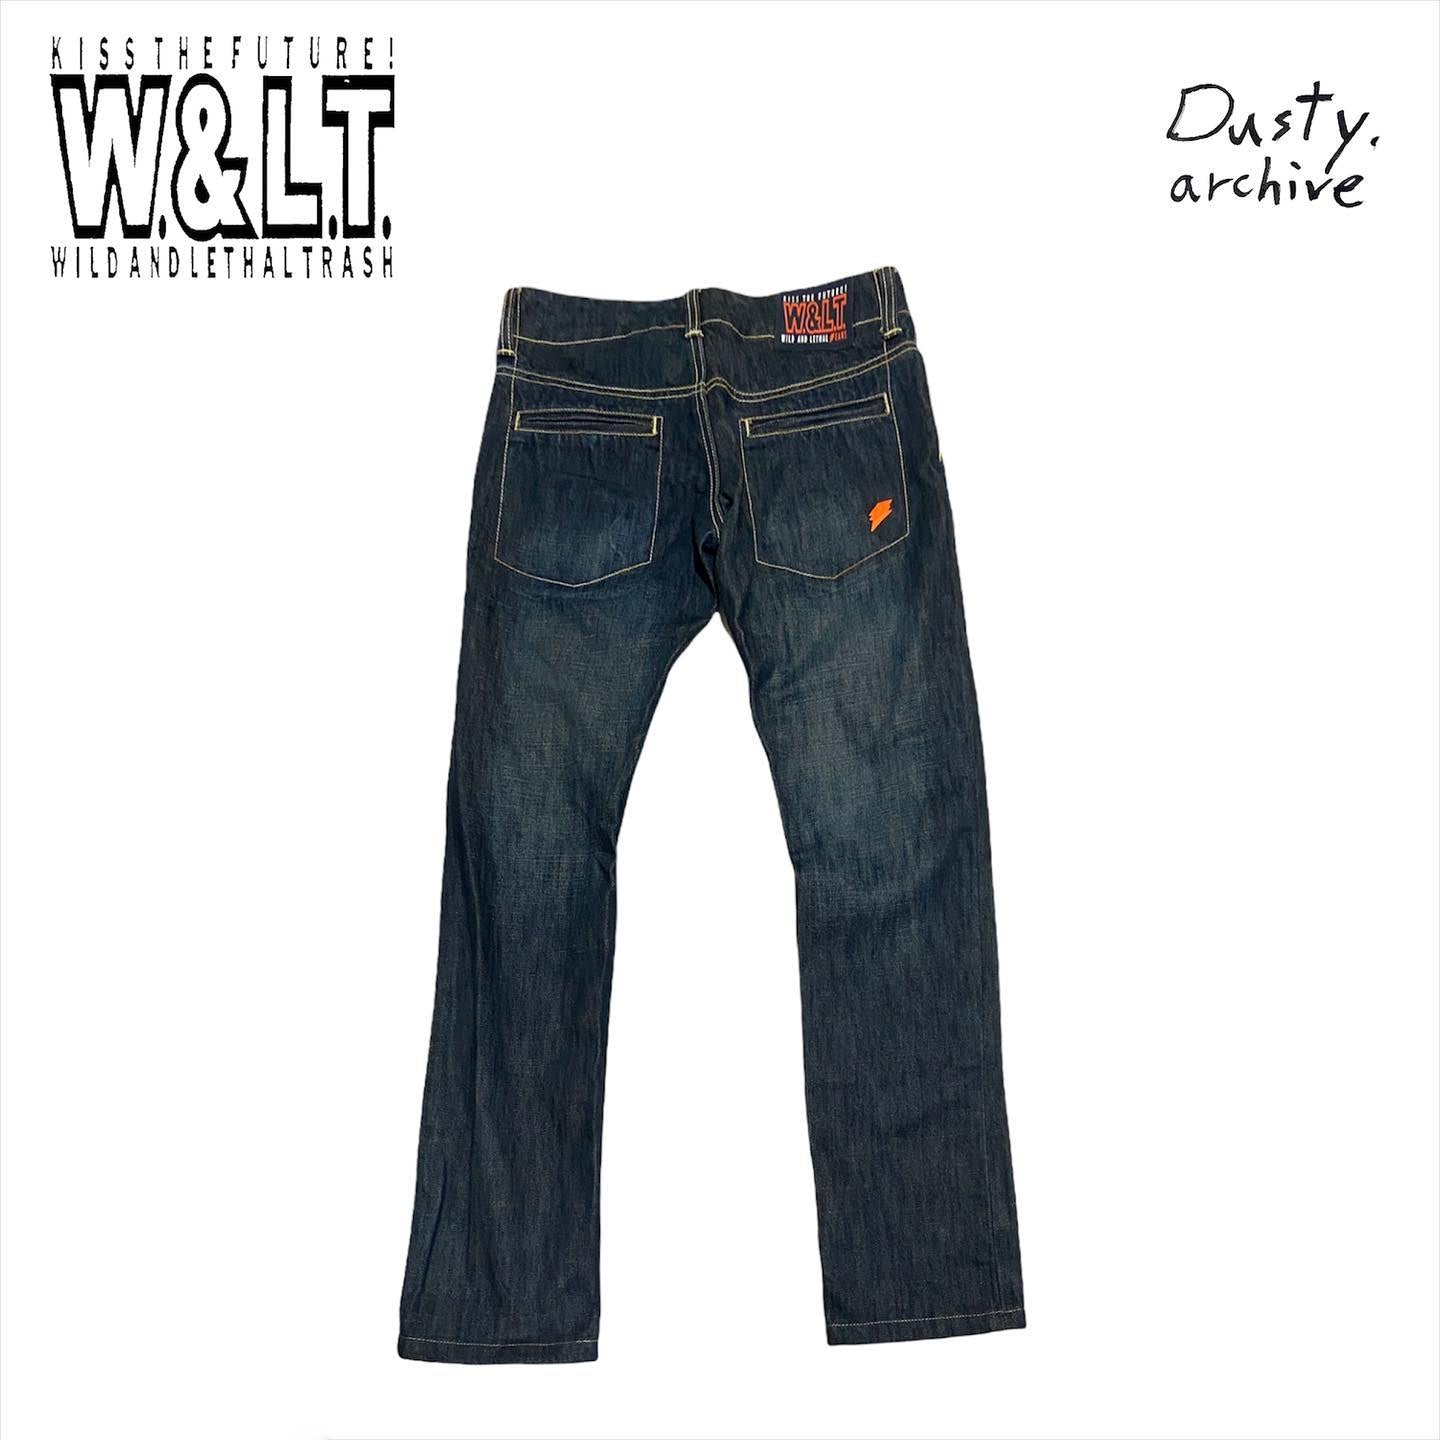 W&lt jeans 25